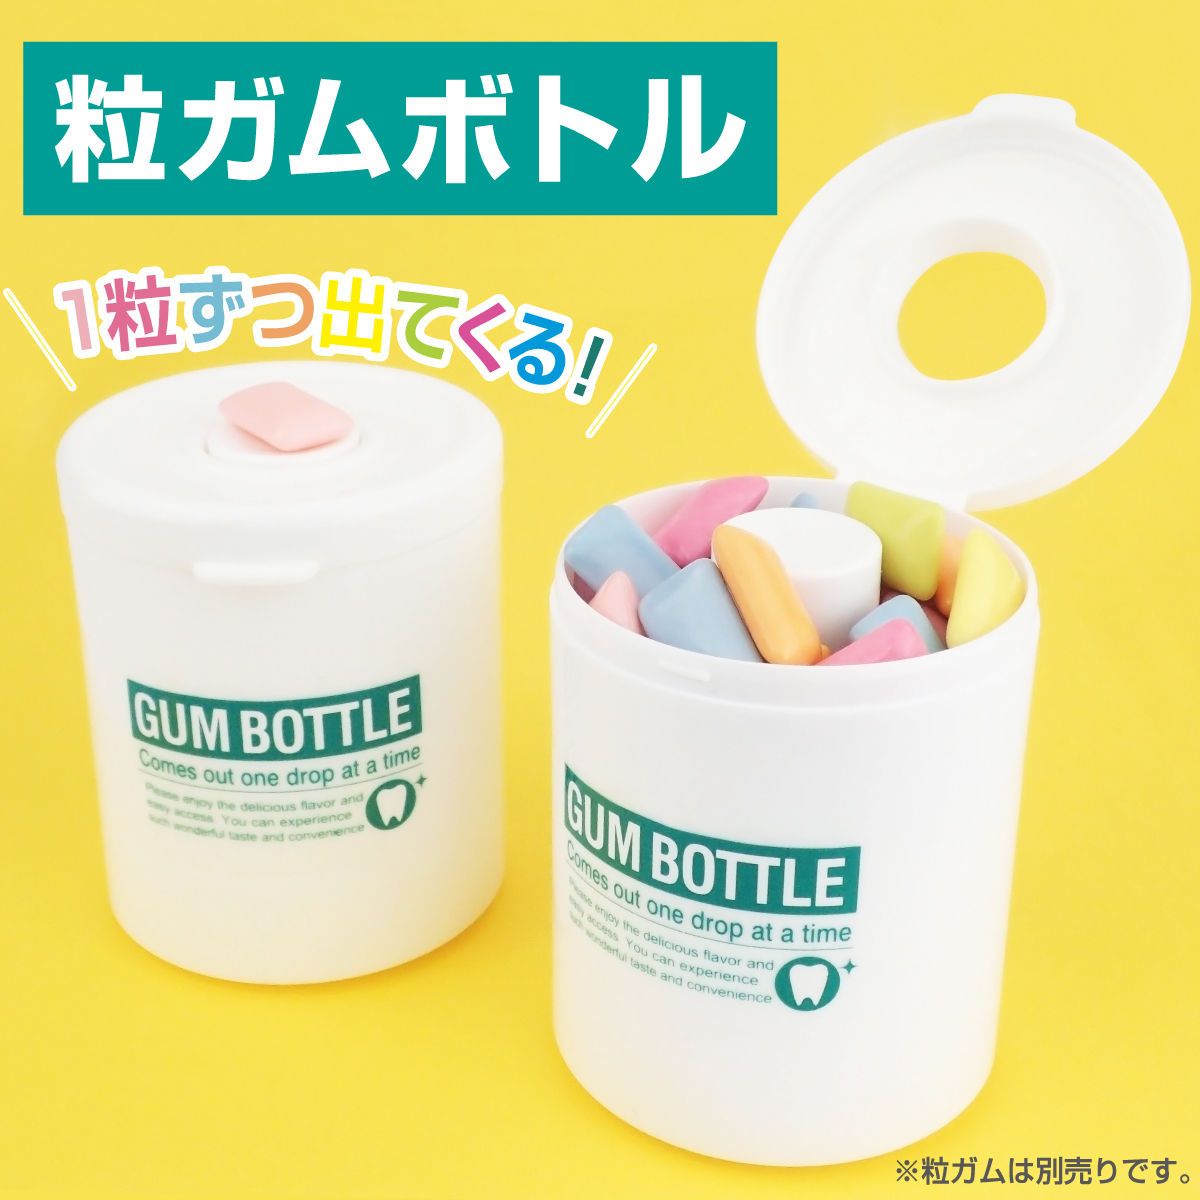 Gum Bottle โหลเสิร์ฟหมากฝรั่งอัตโนมัติจาก Daiso 